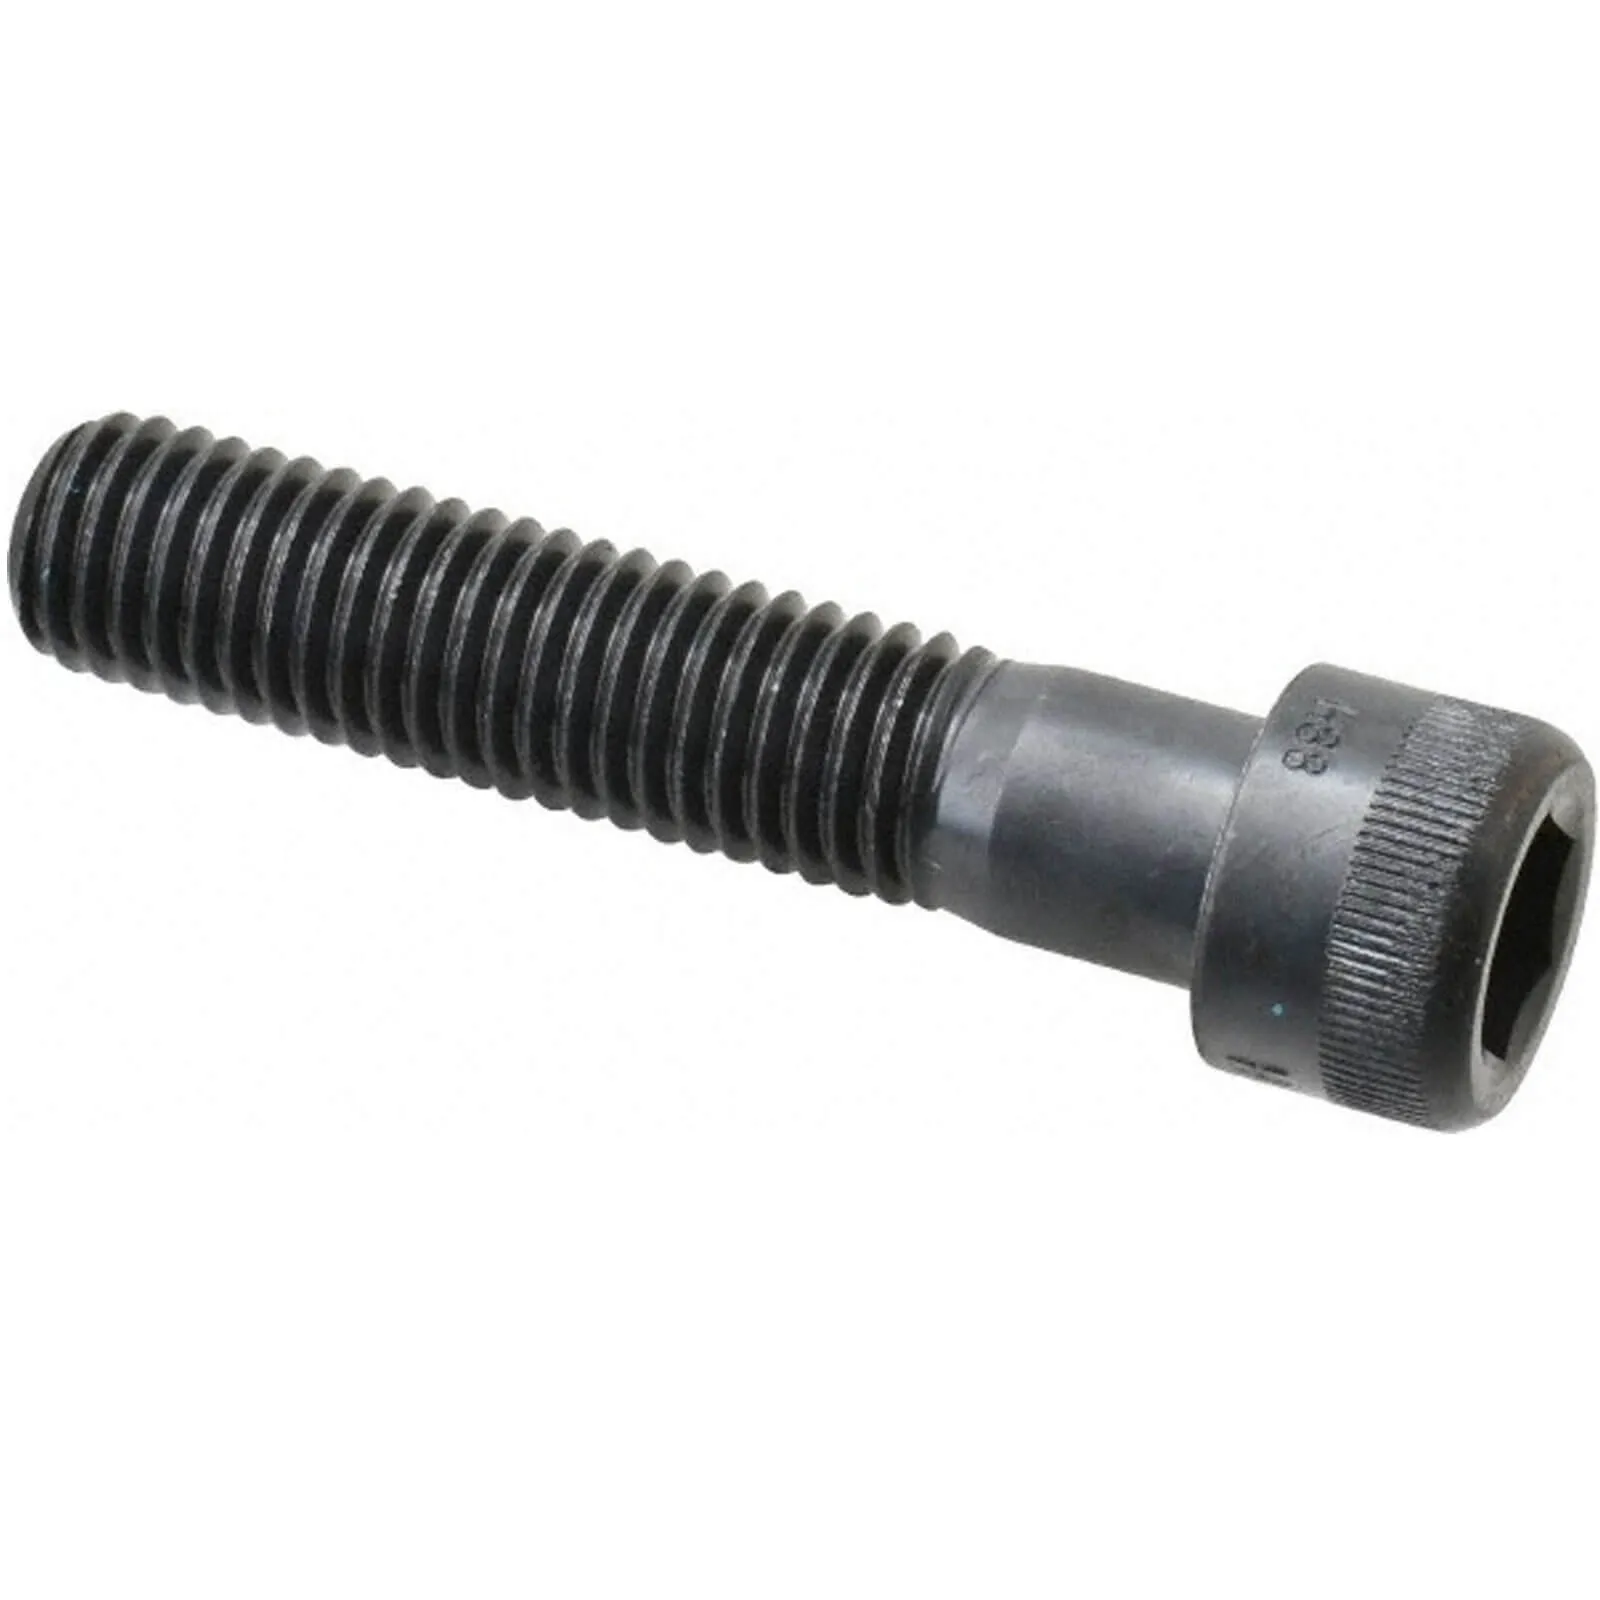 Holo Krome Genuine 12.9 Grade Socket Cap Screws - M12, 180mm, Pack of 10